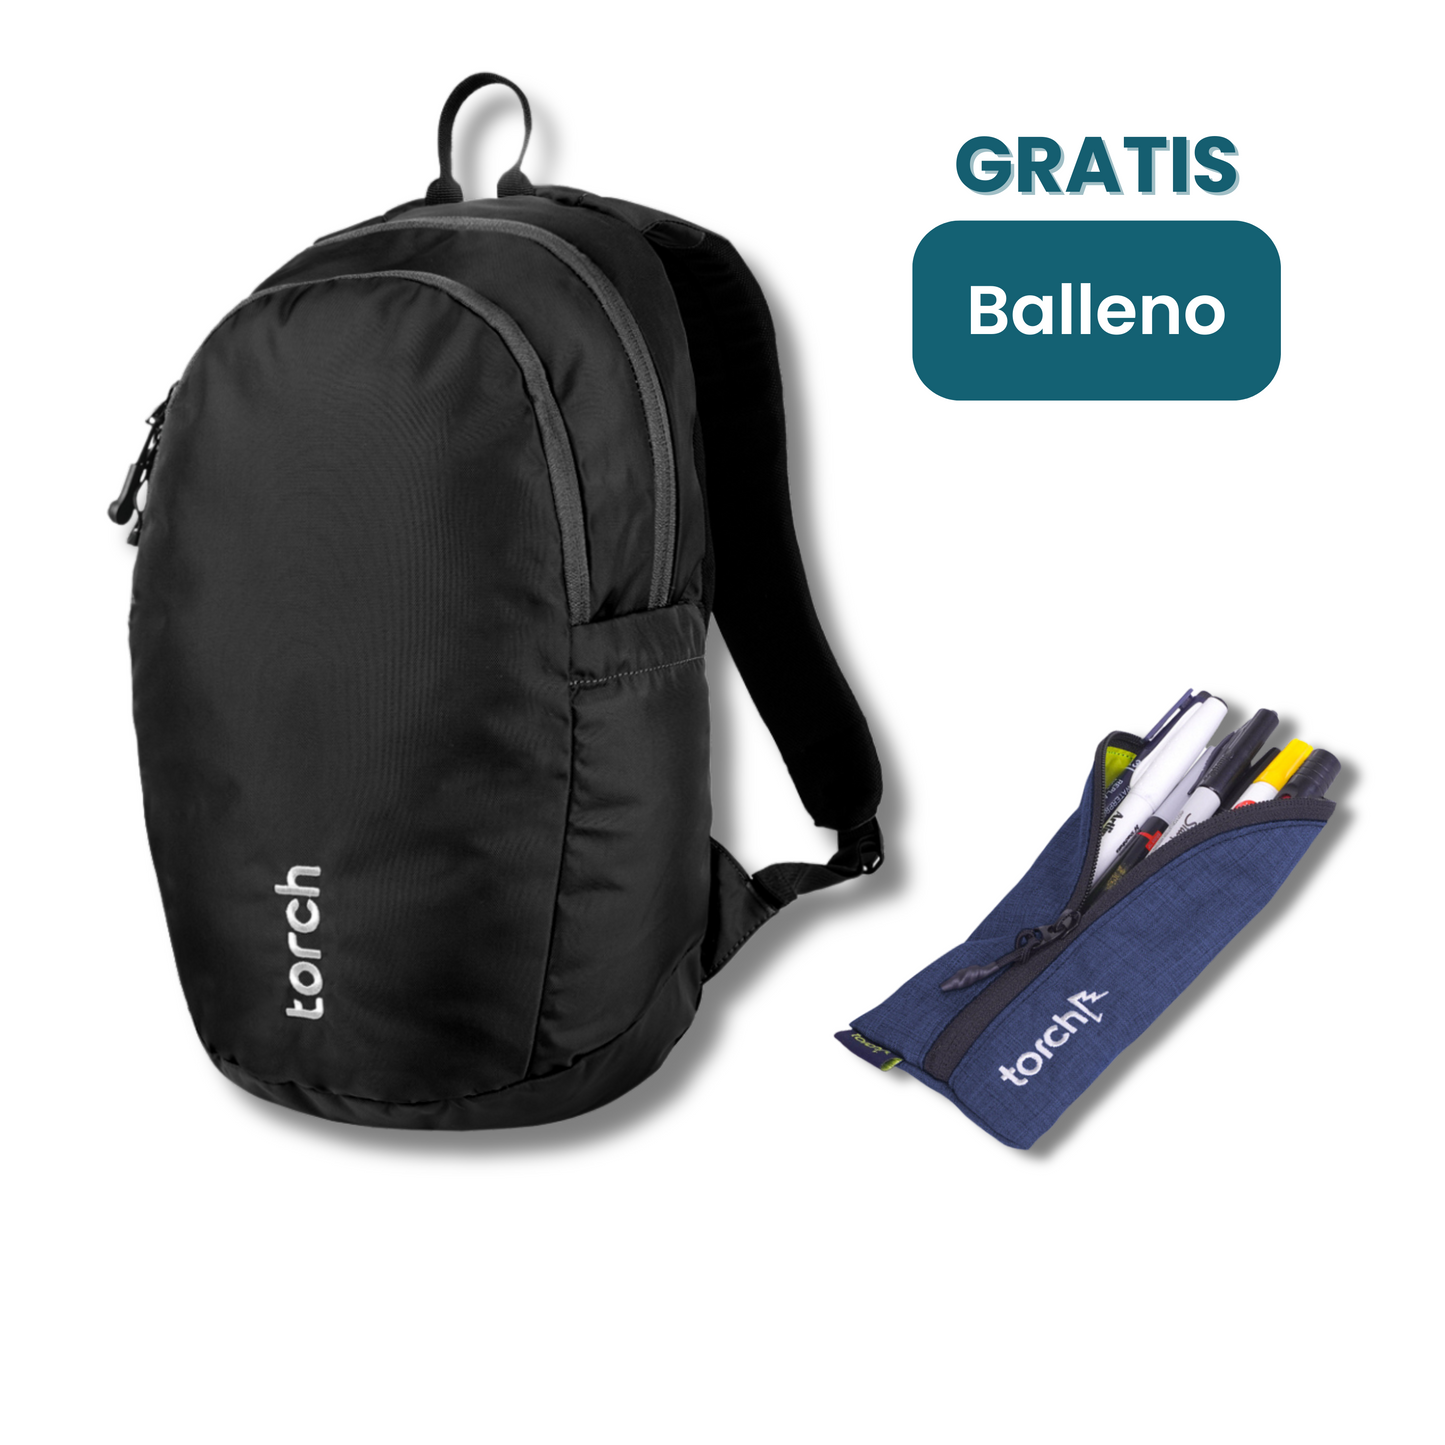 Paket Gratis - Prana Backpack Free Balleno Stationery